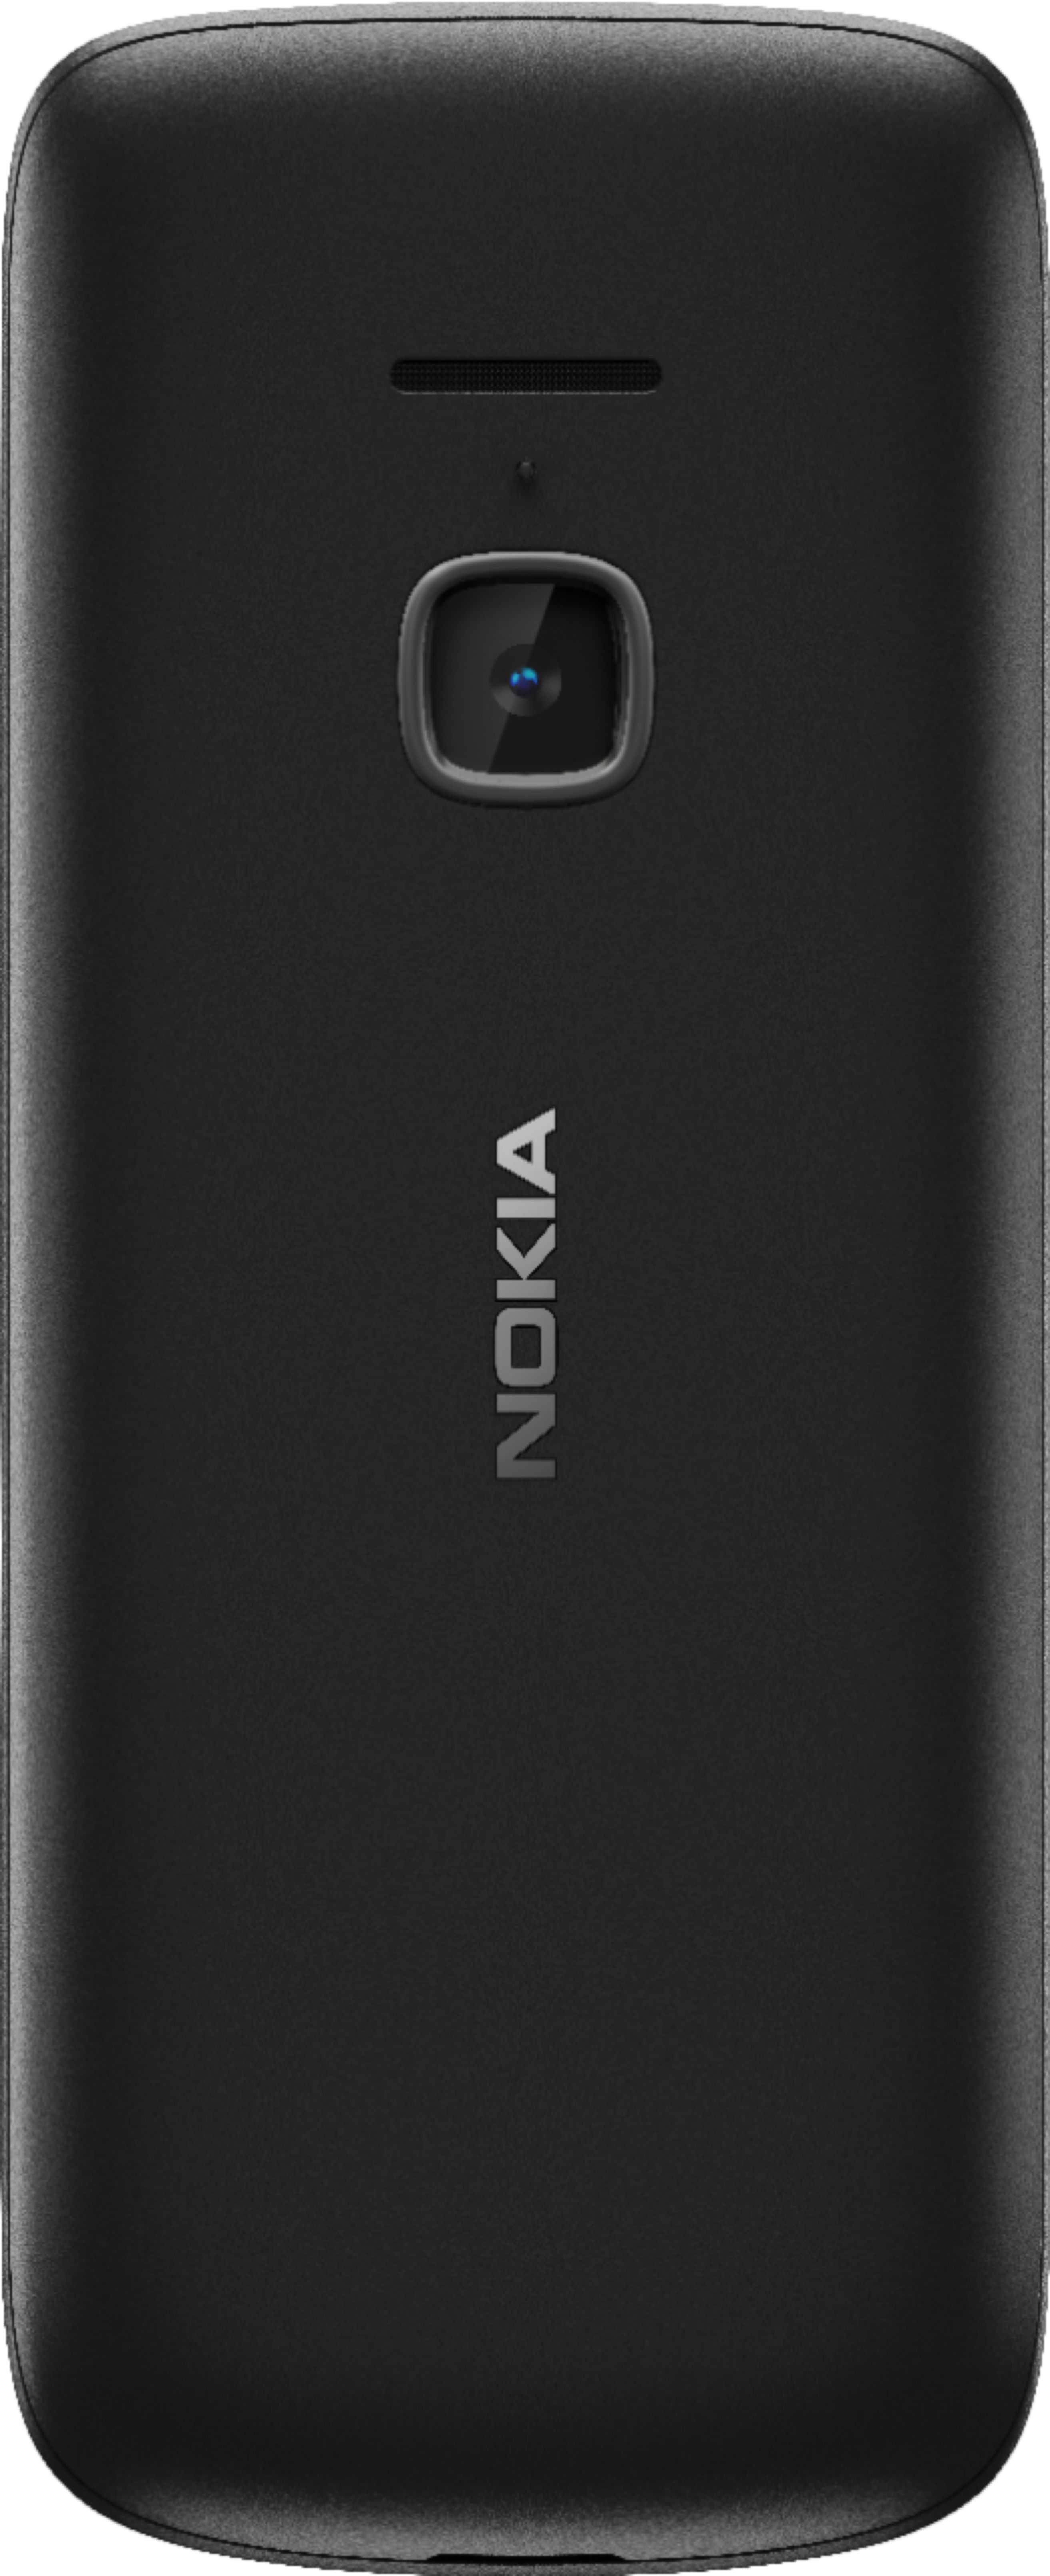 Nokia 225 Unlocked Black Ta 1282 Best Buy